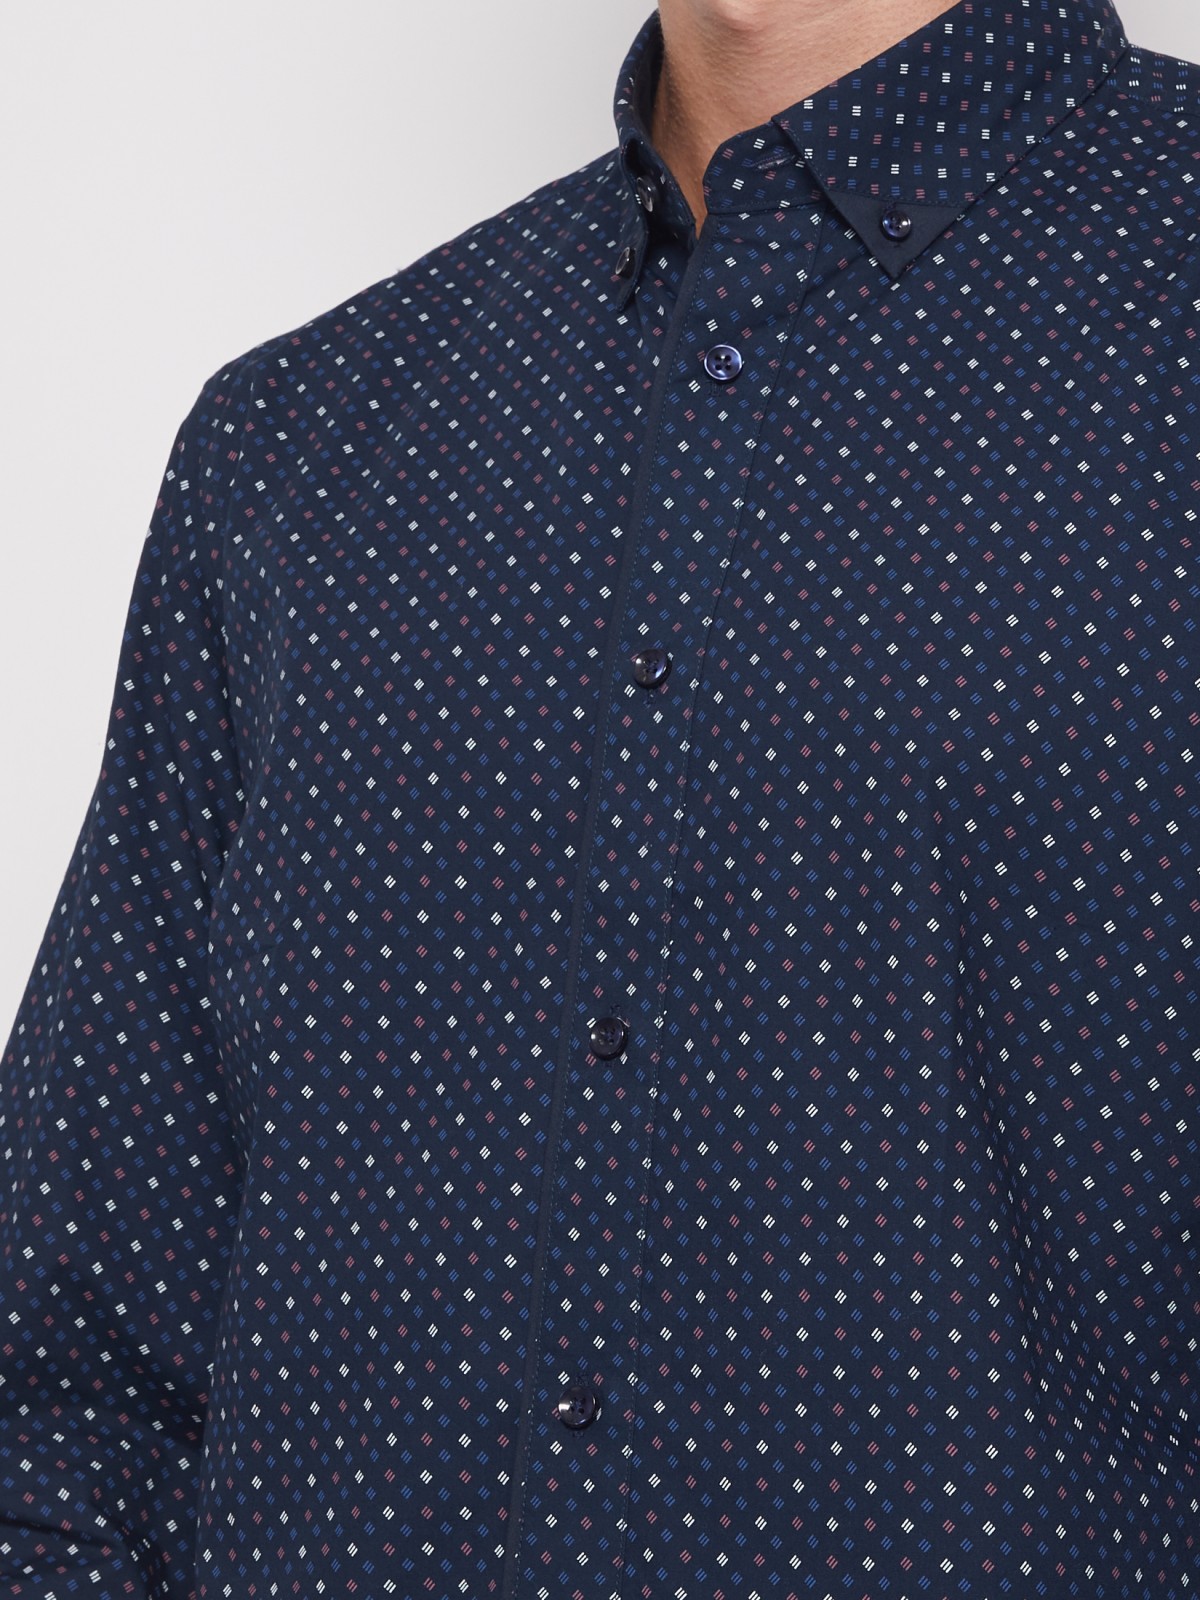 Хлопковая рубашка с мелким принтом zolla 011452159043, цвет темно-синий, размер M - фото 5